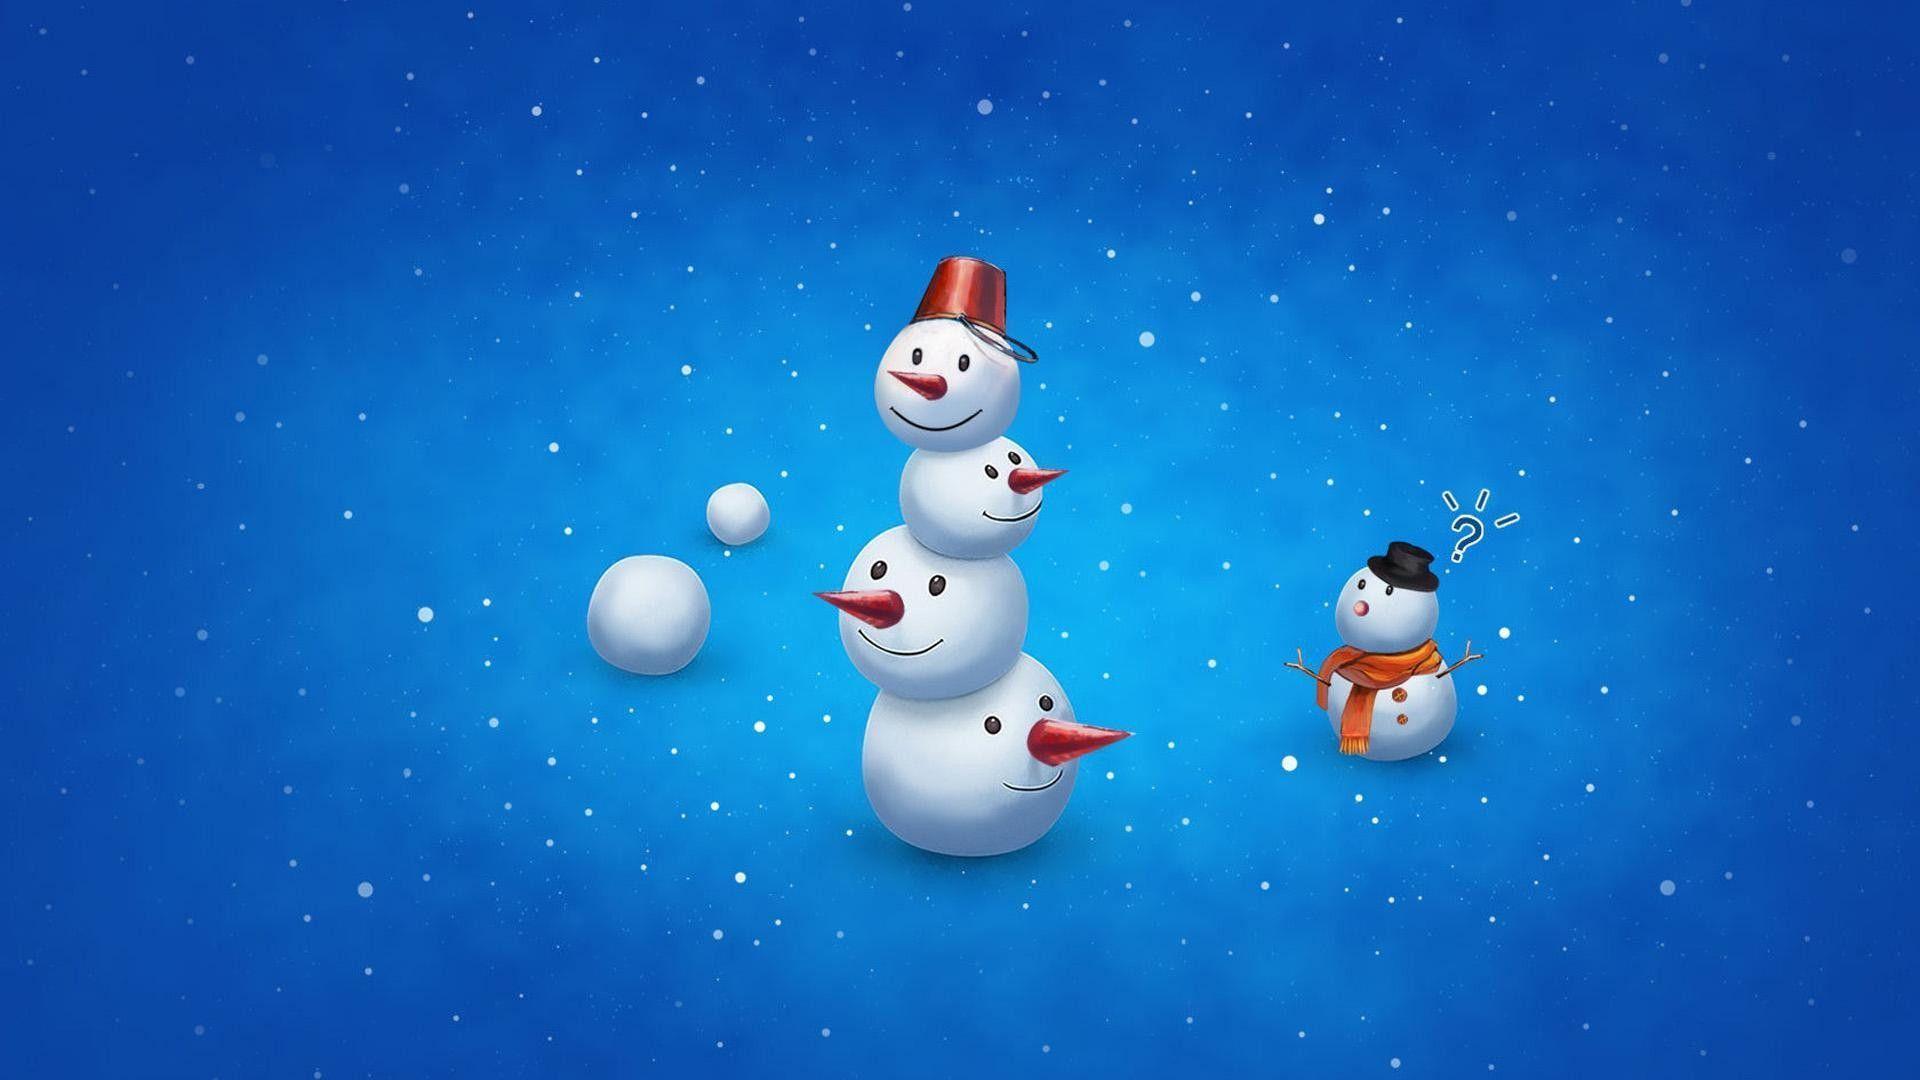 Xmas Stuff For > Cute Christmas Snowman Wallpaper